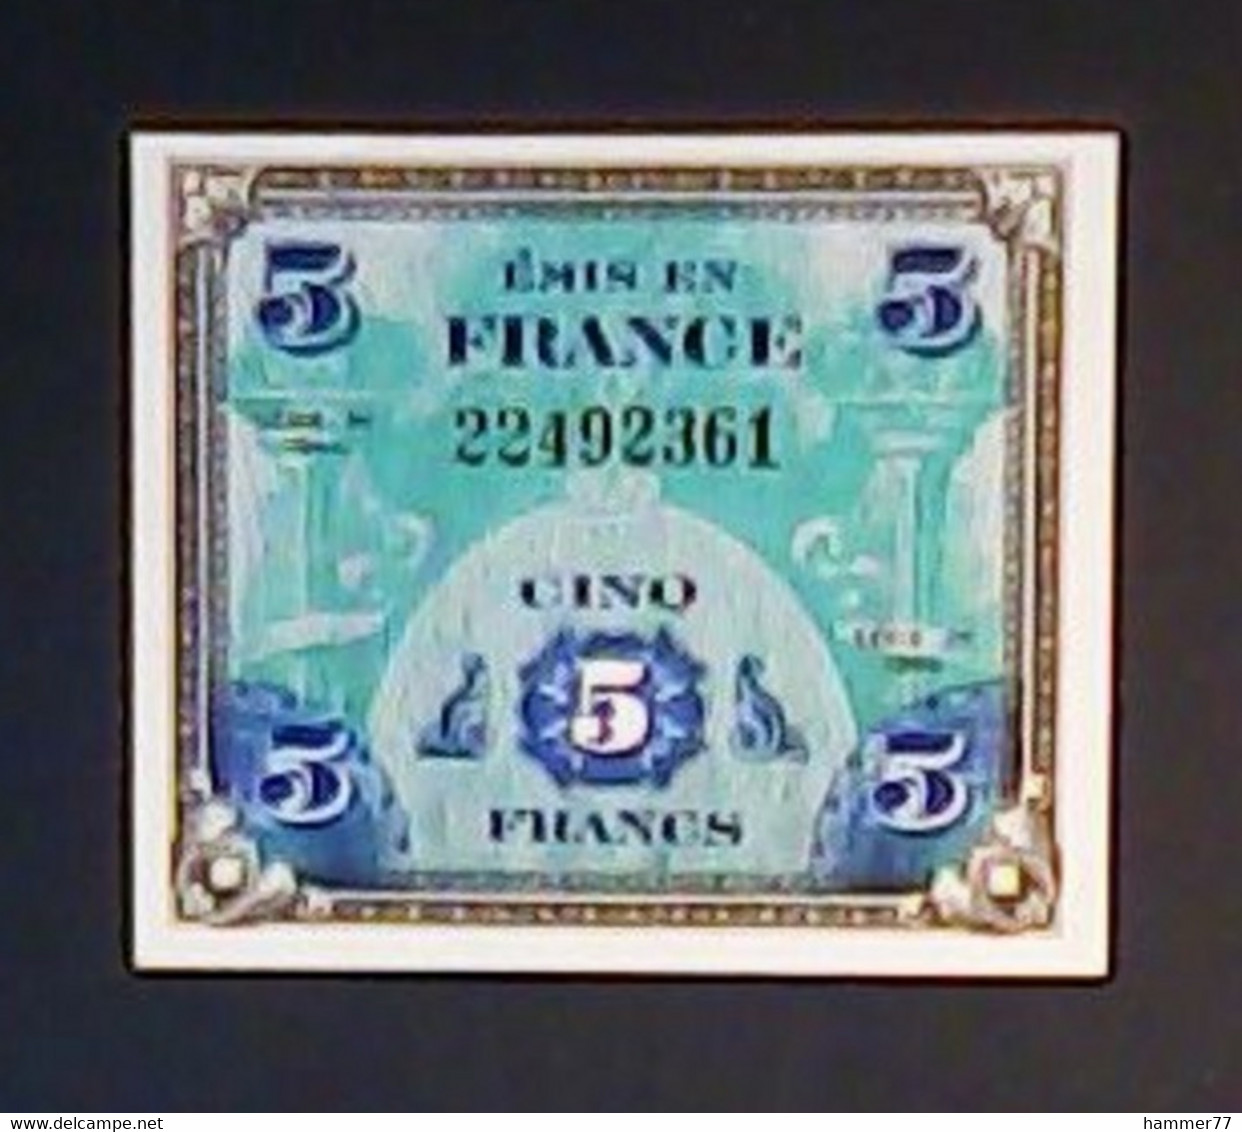 France 1944: Allied Occupation 5 Francs - 1944 Flagge/Frankreich